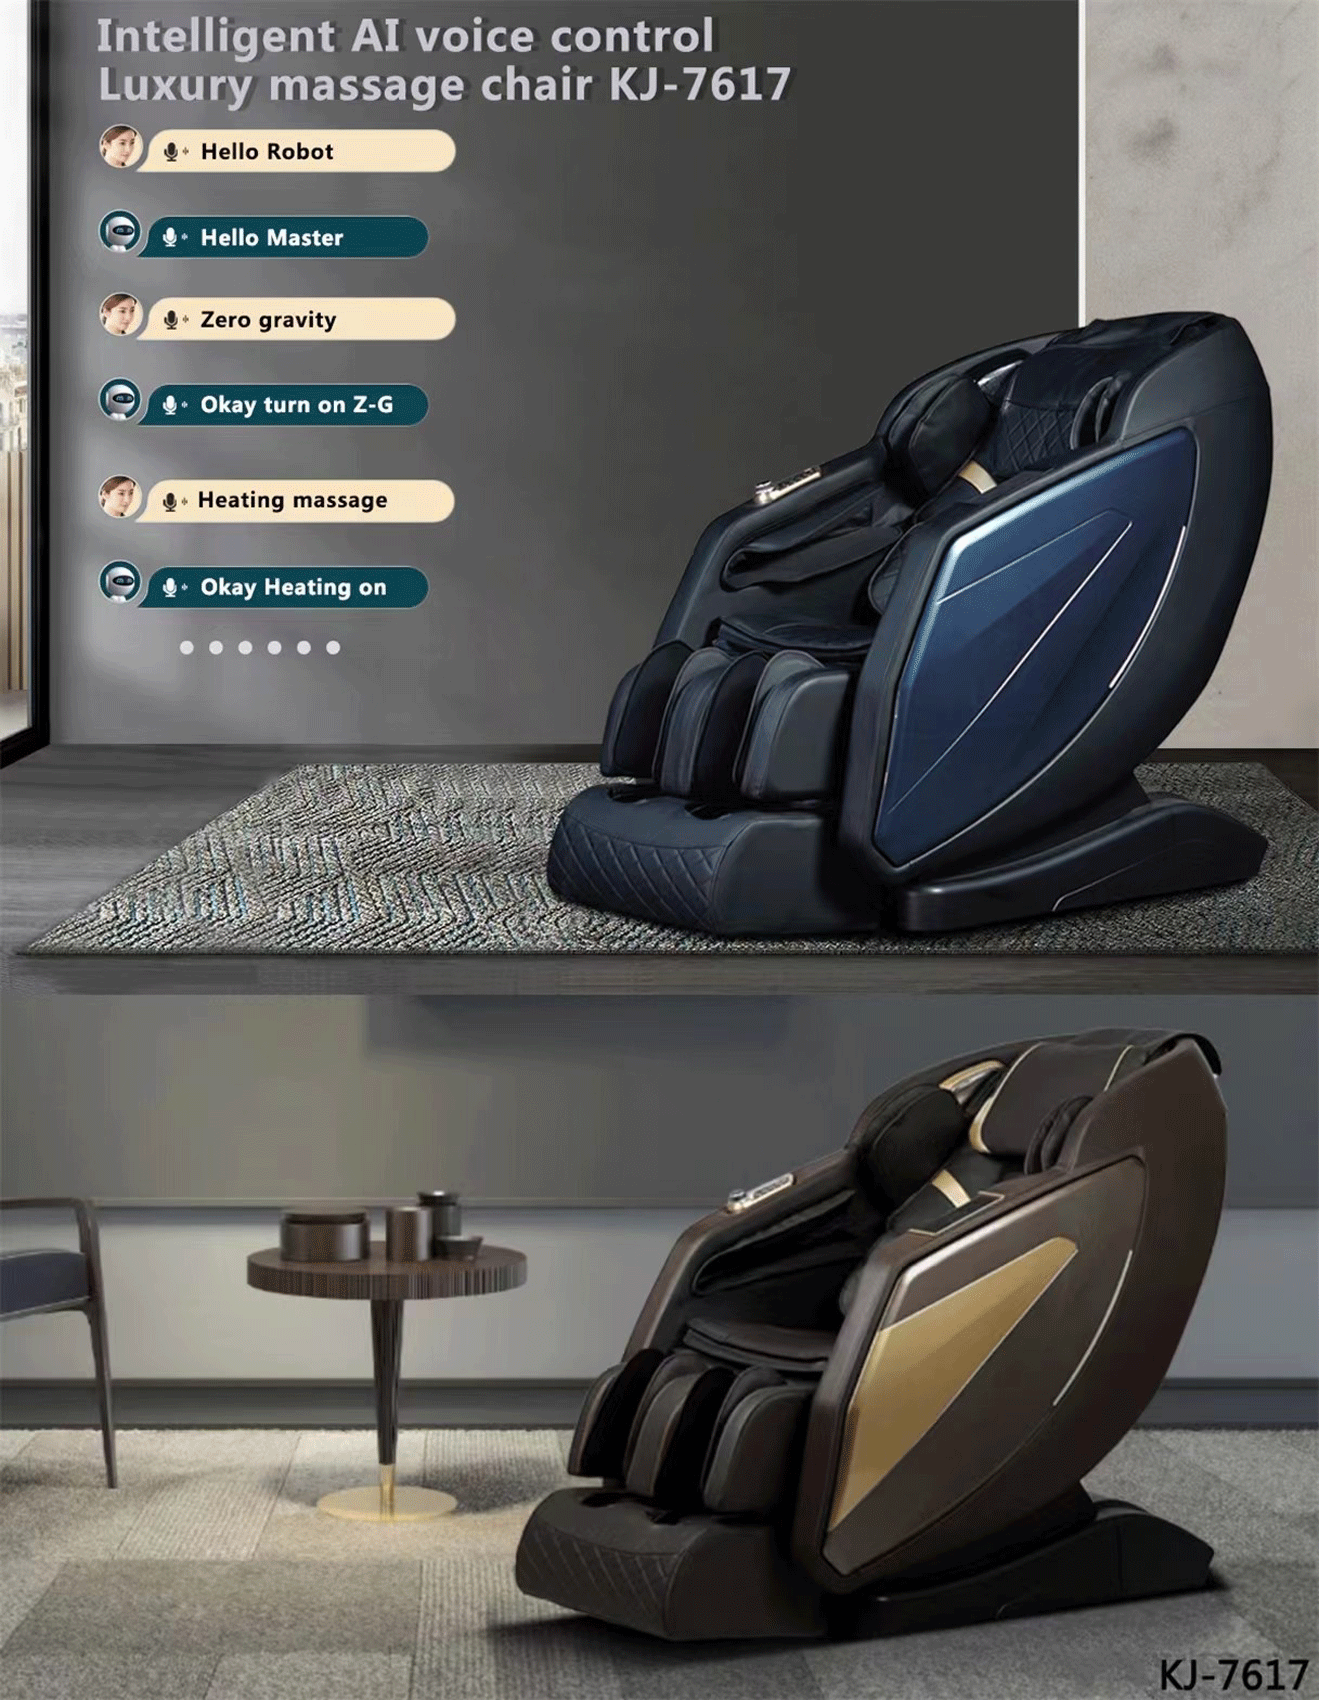 Brands Franco AZKARY II SIDEBOARDS, SPAIN KJ-7617 Intelligent AI voice control Massage Chair